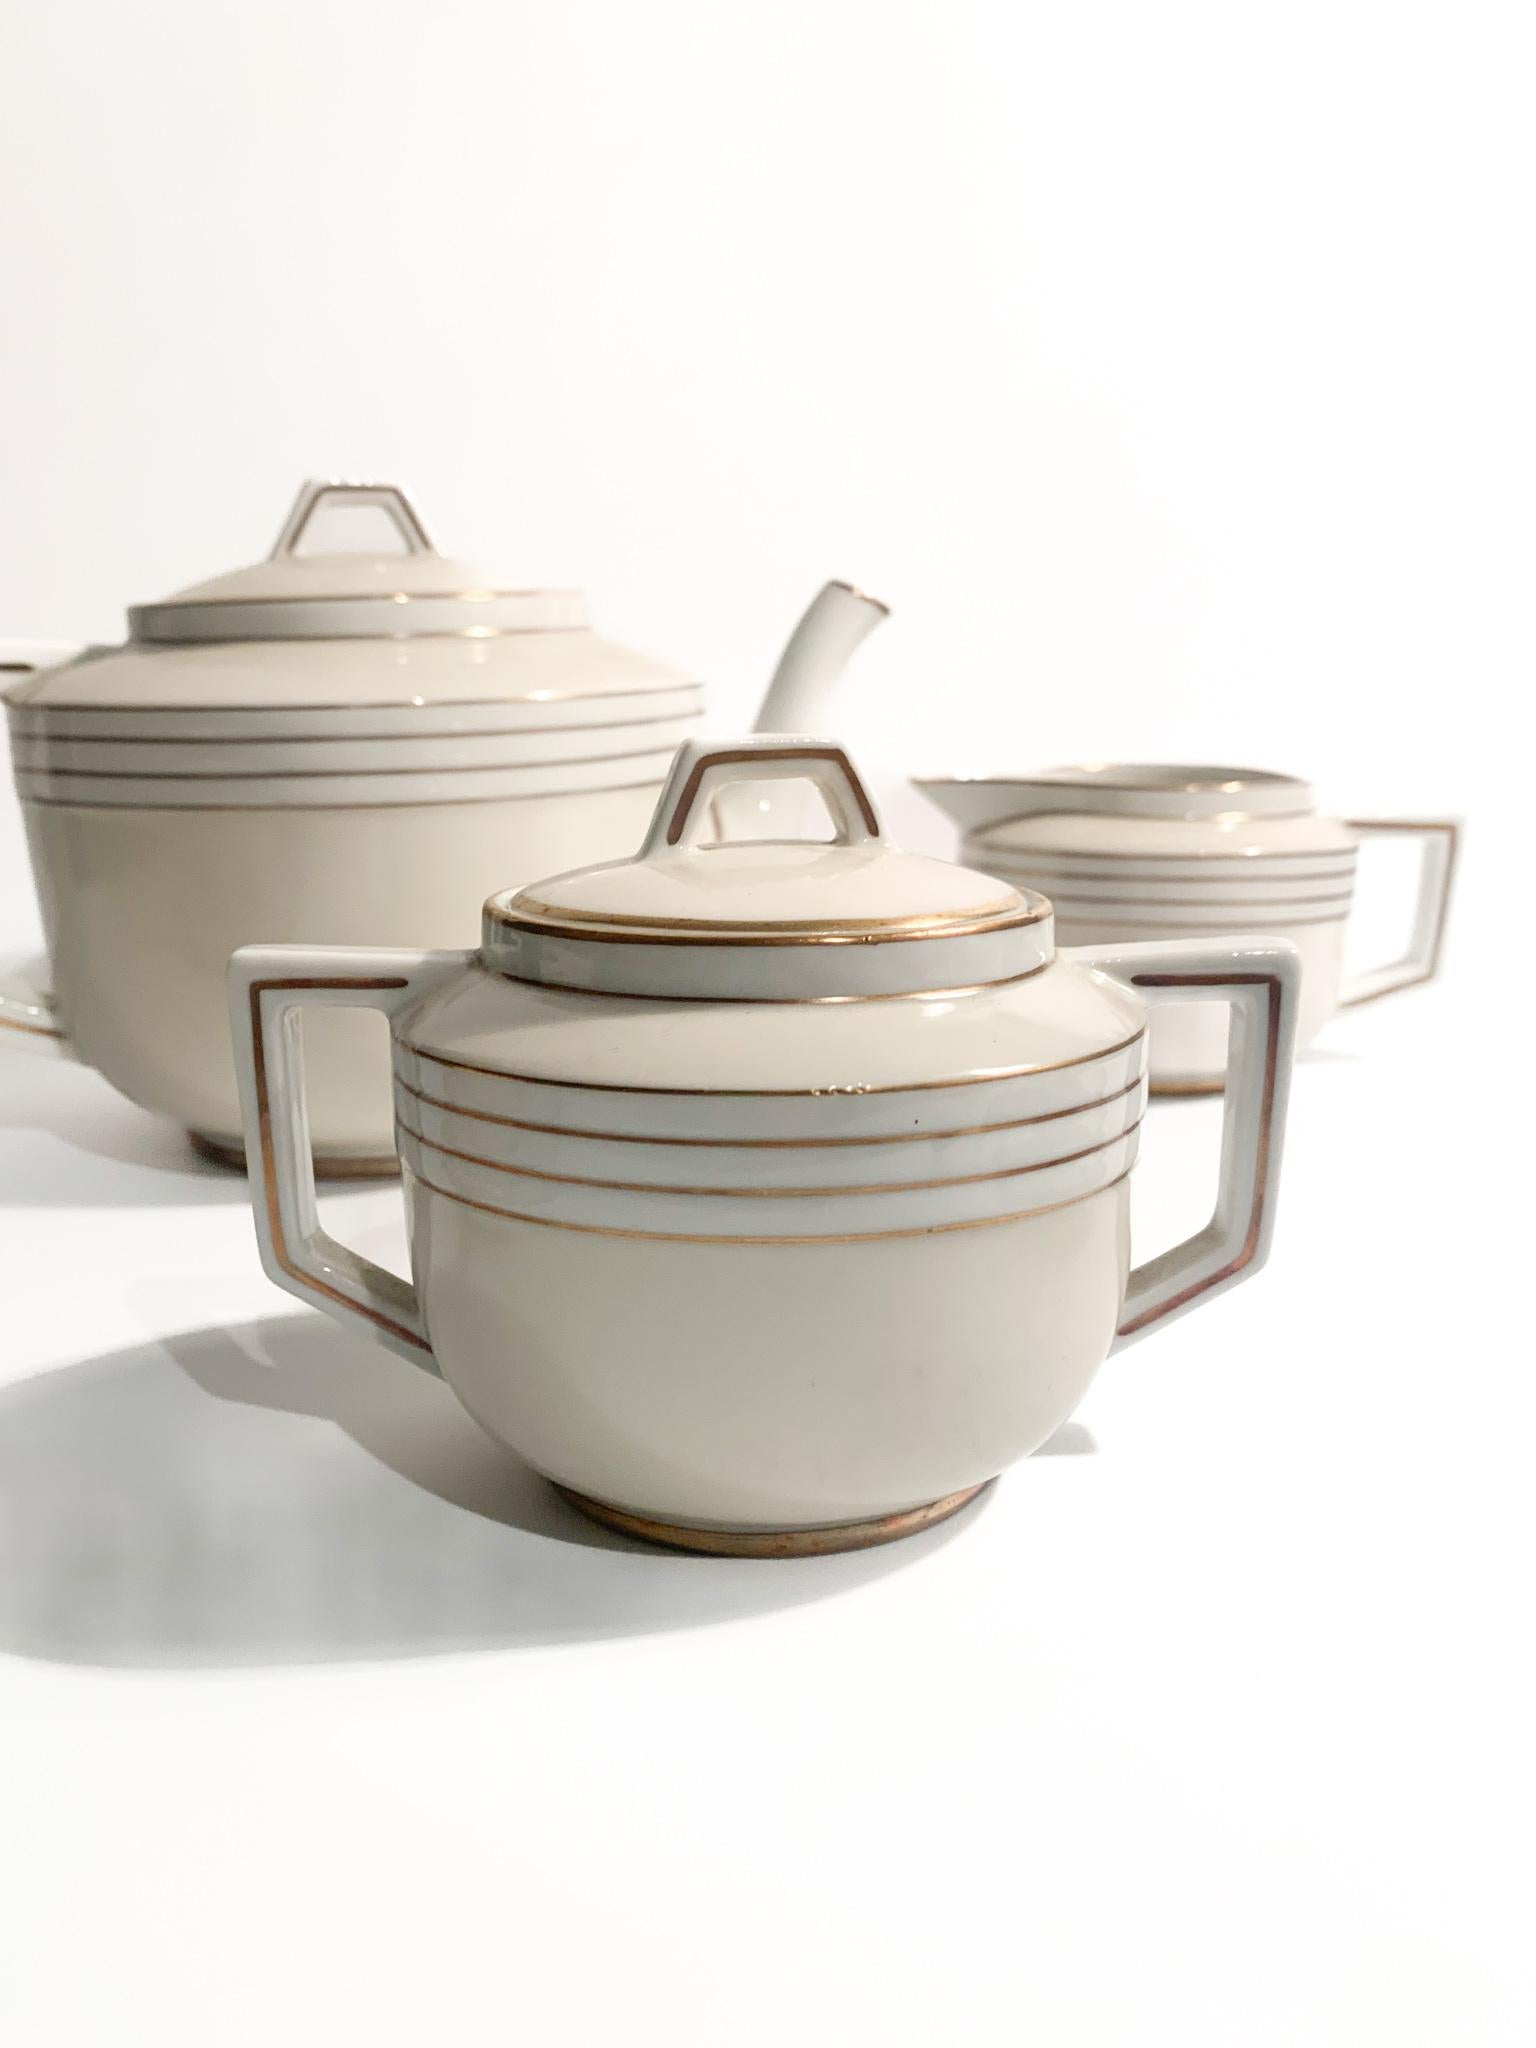 Mid-20th Century Twelve Richard Ginori Decò Tea Set in Porcelain from the 1940s